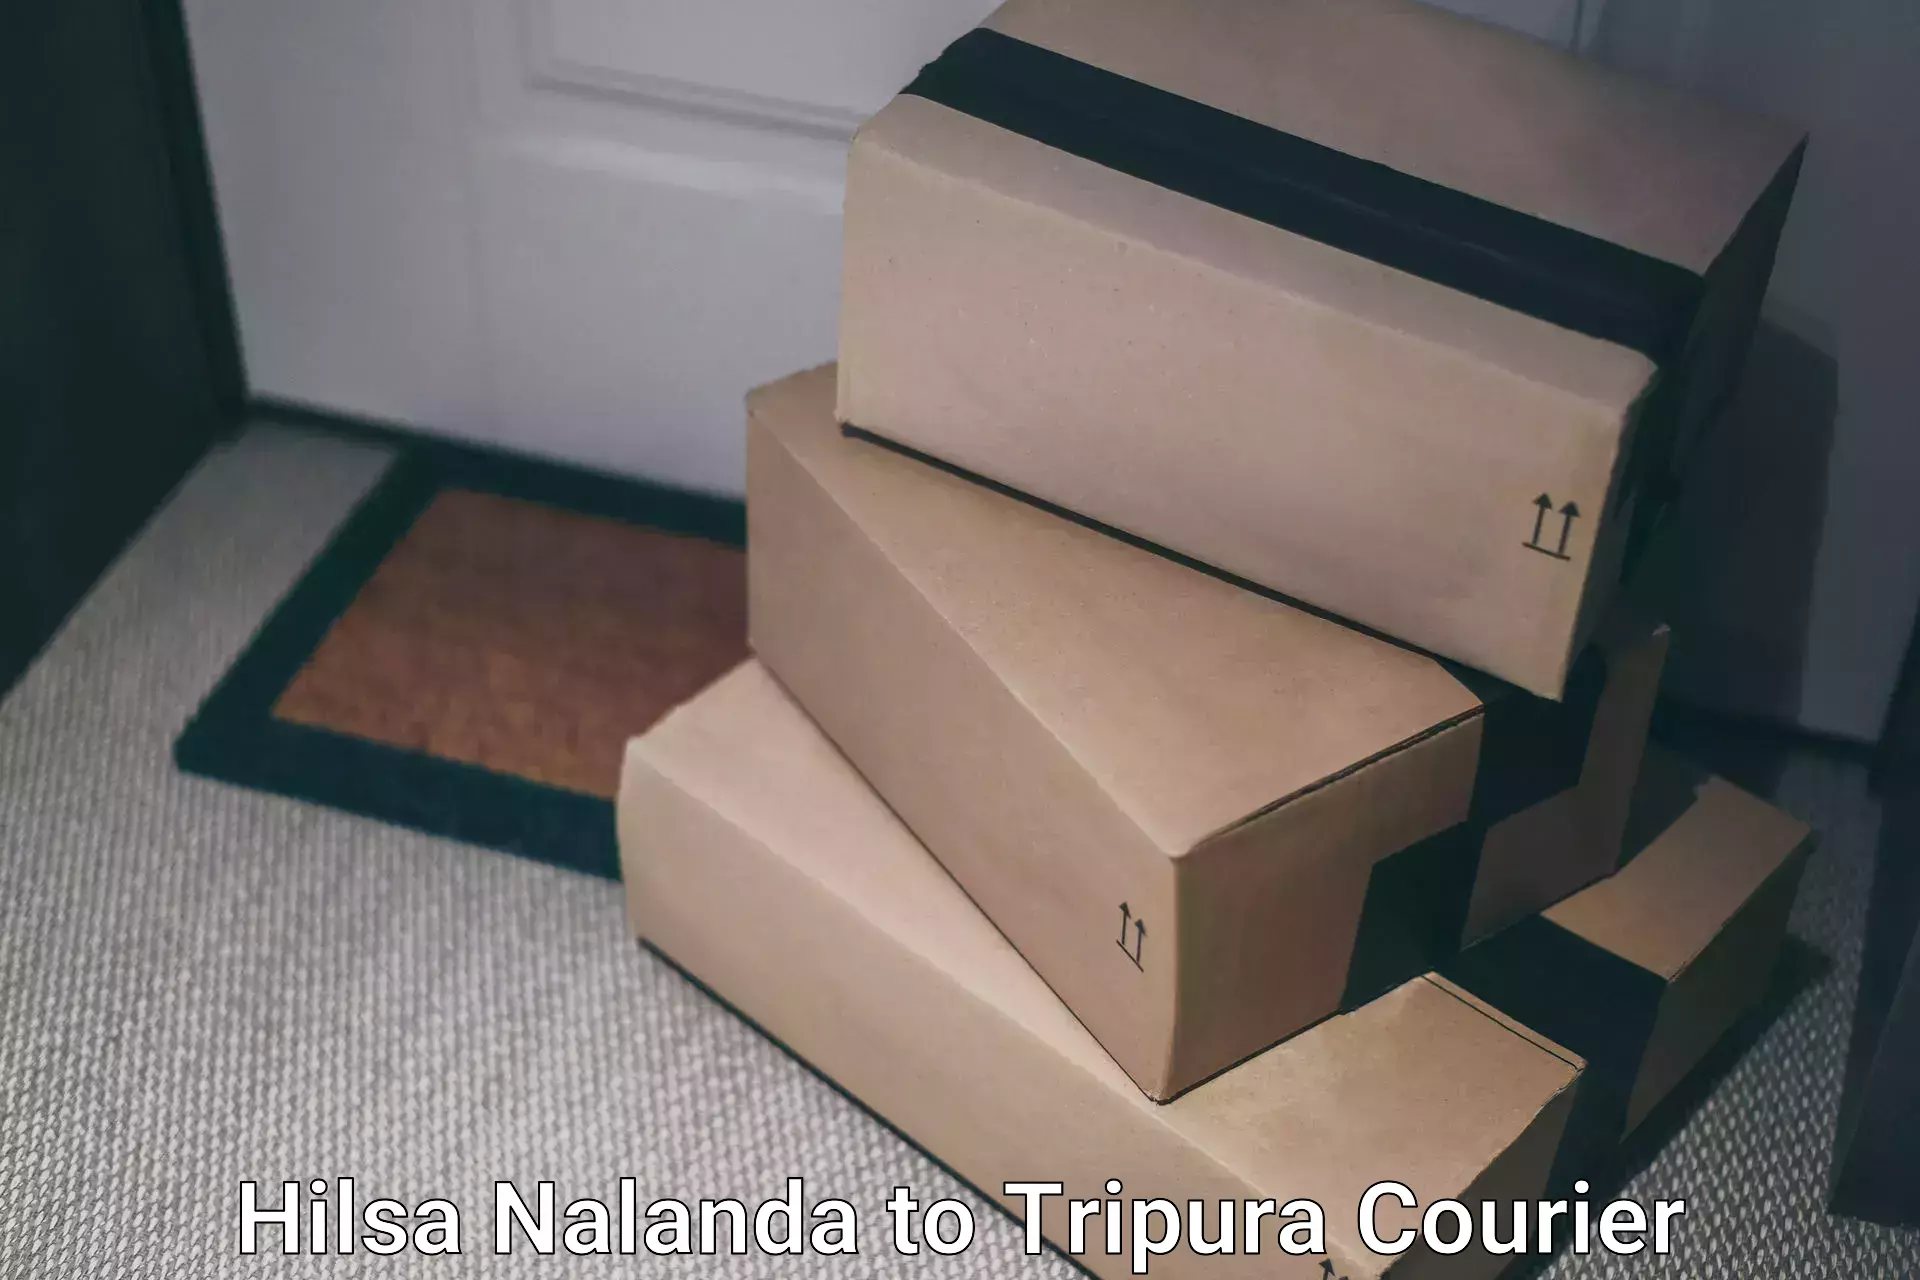 Multi-national courier services Hilsa Nalanda to Agartala